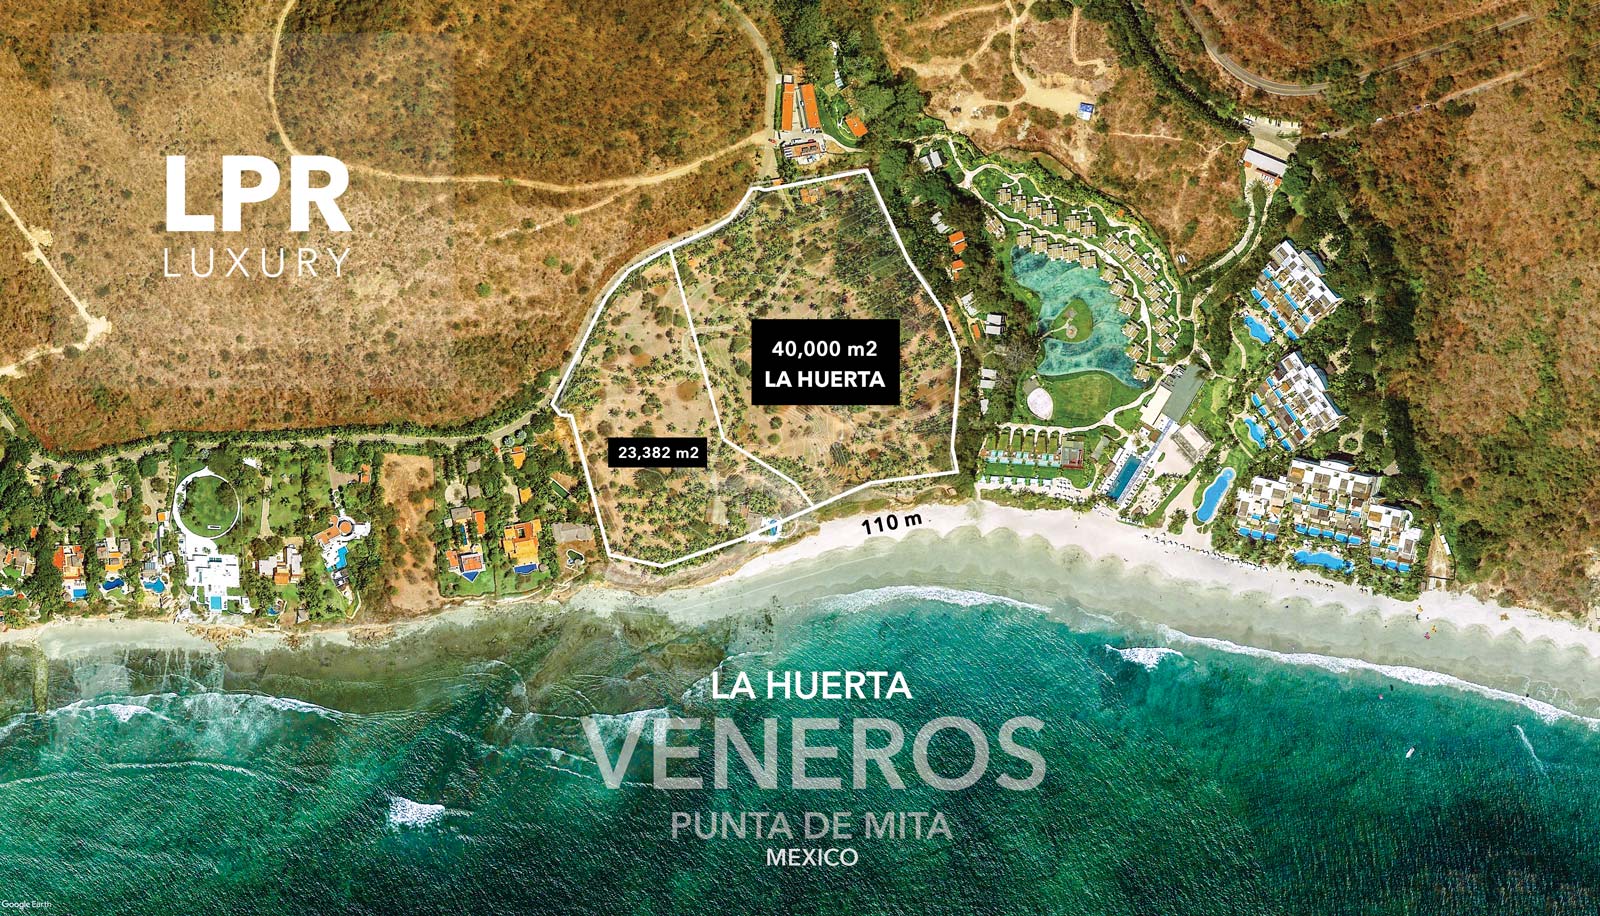 Veneros - La Huerta